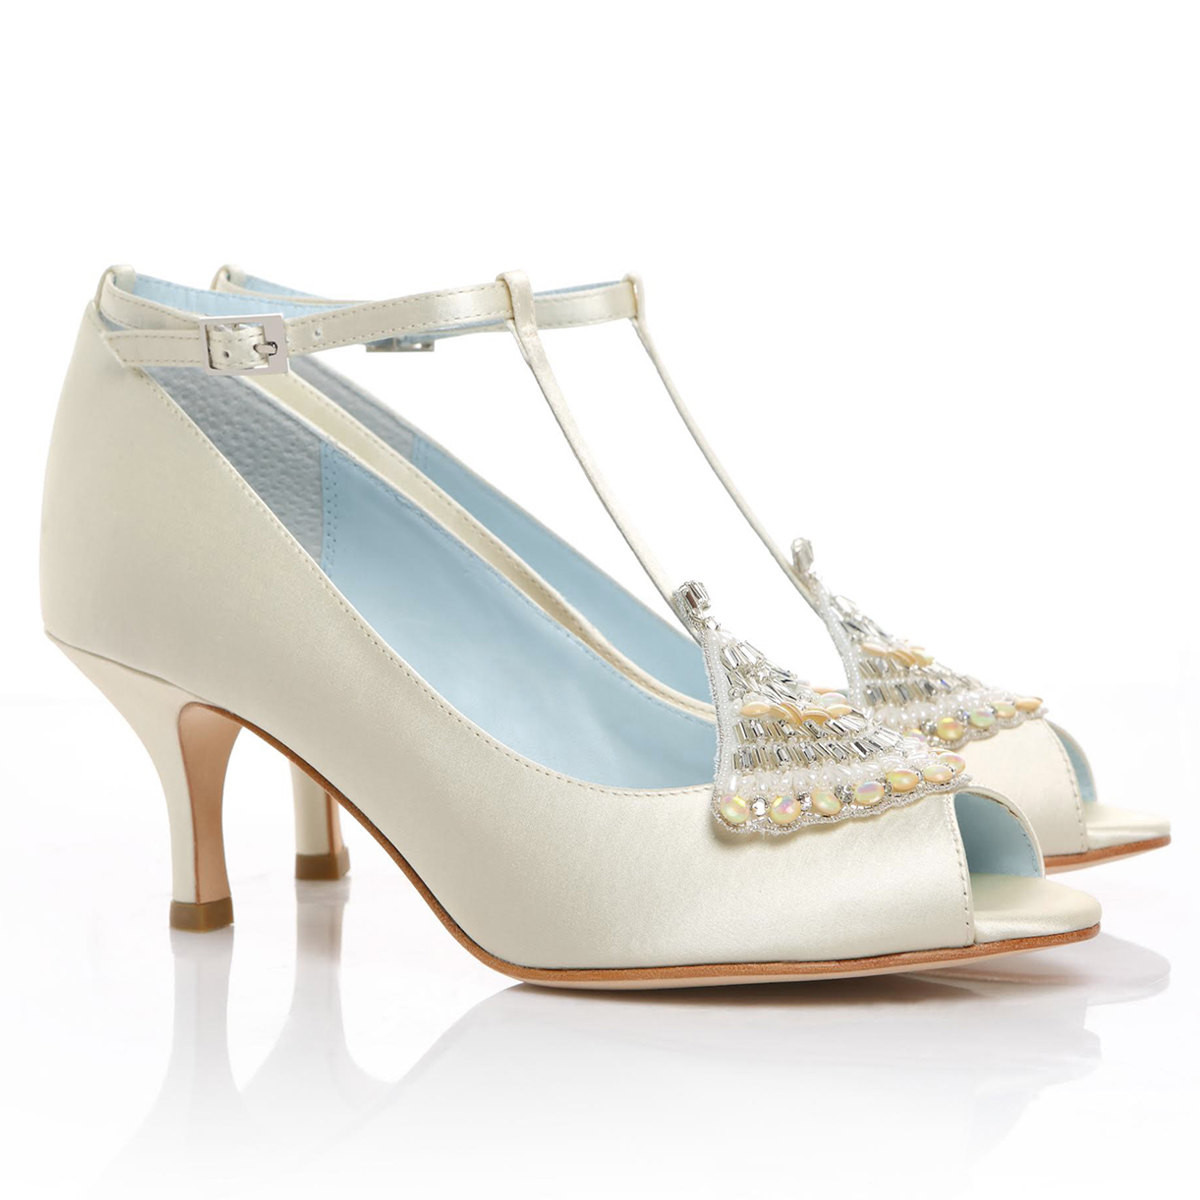 Vintage Wedding Shoes Low Heel
 Low Heel Ivory Wedding Shoes with Art Deco Crystal Applique